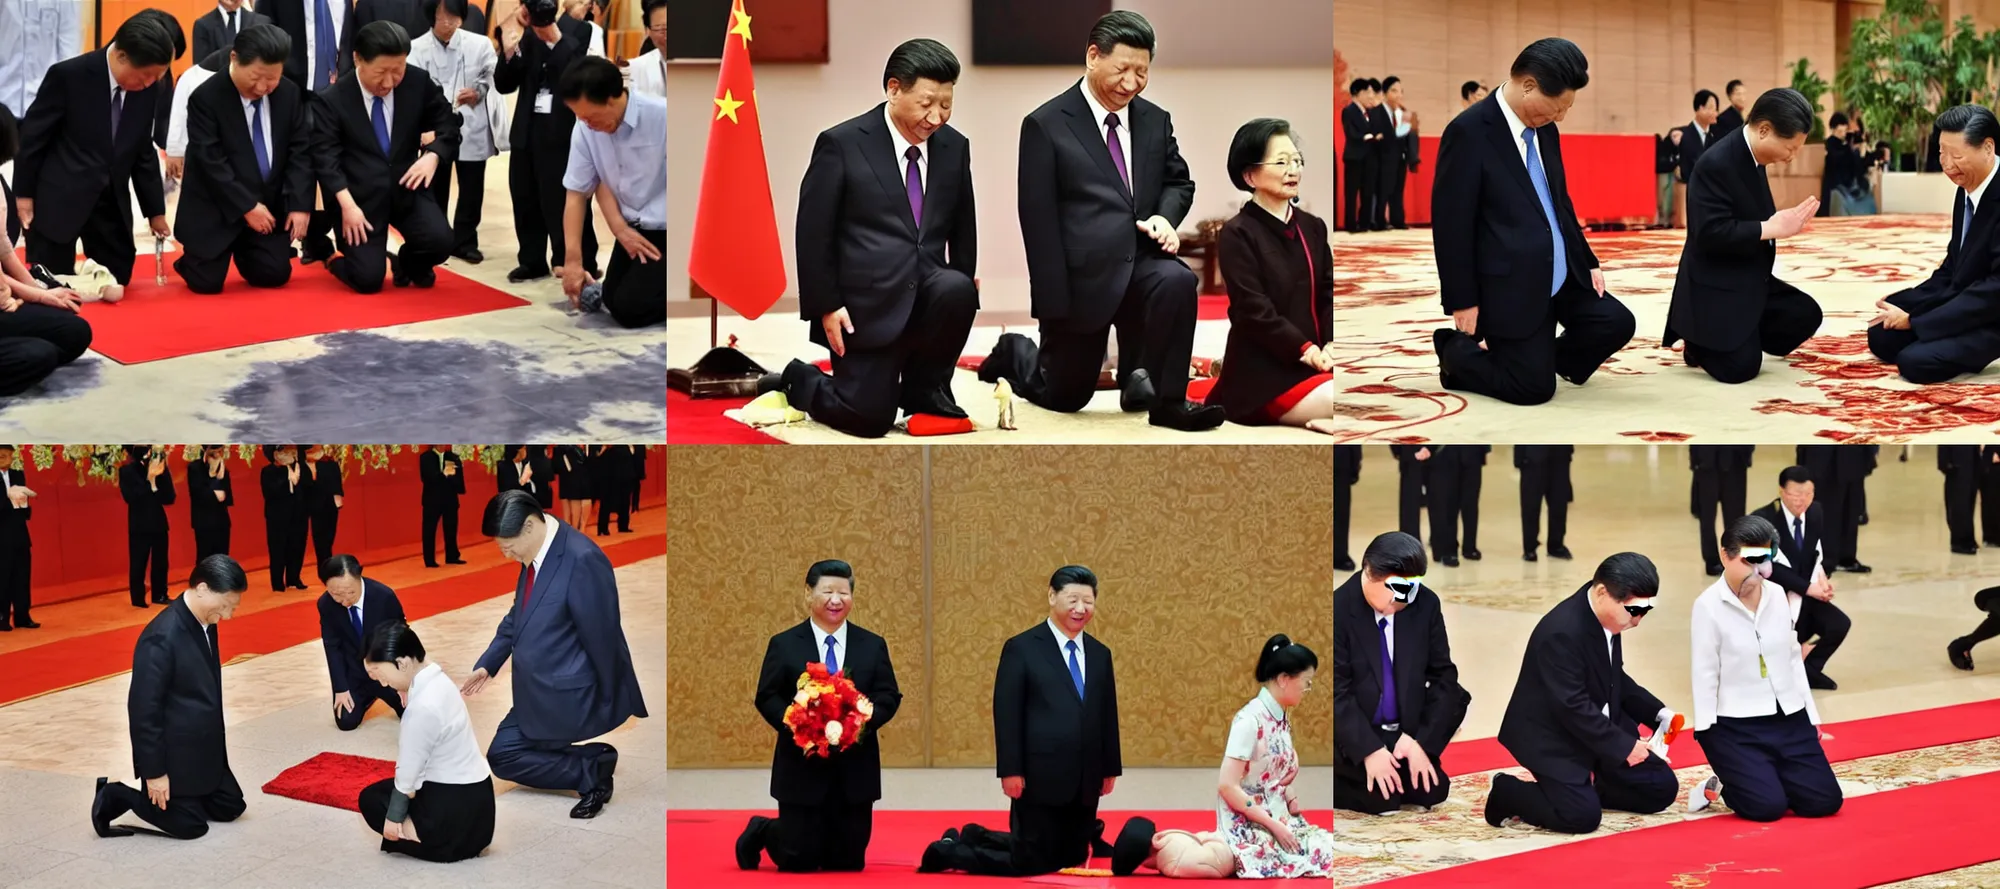 Prompt: xi jinping kneeling in front of tsai ing - wen